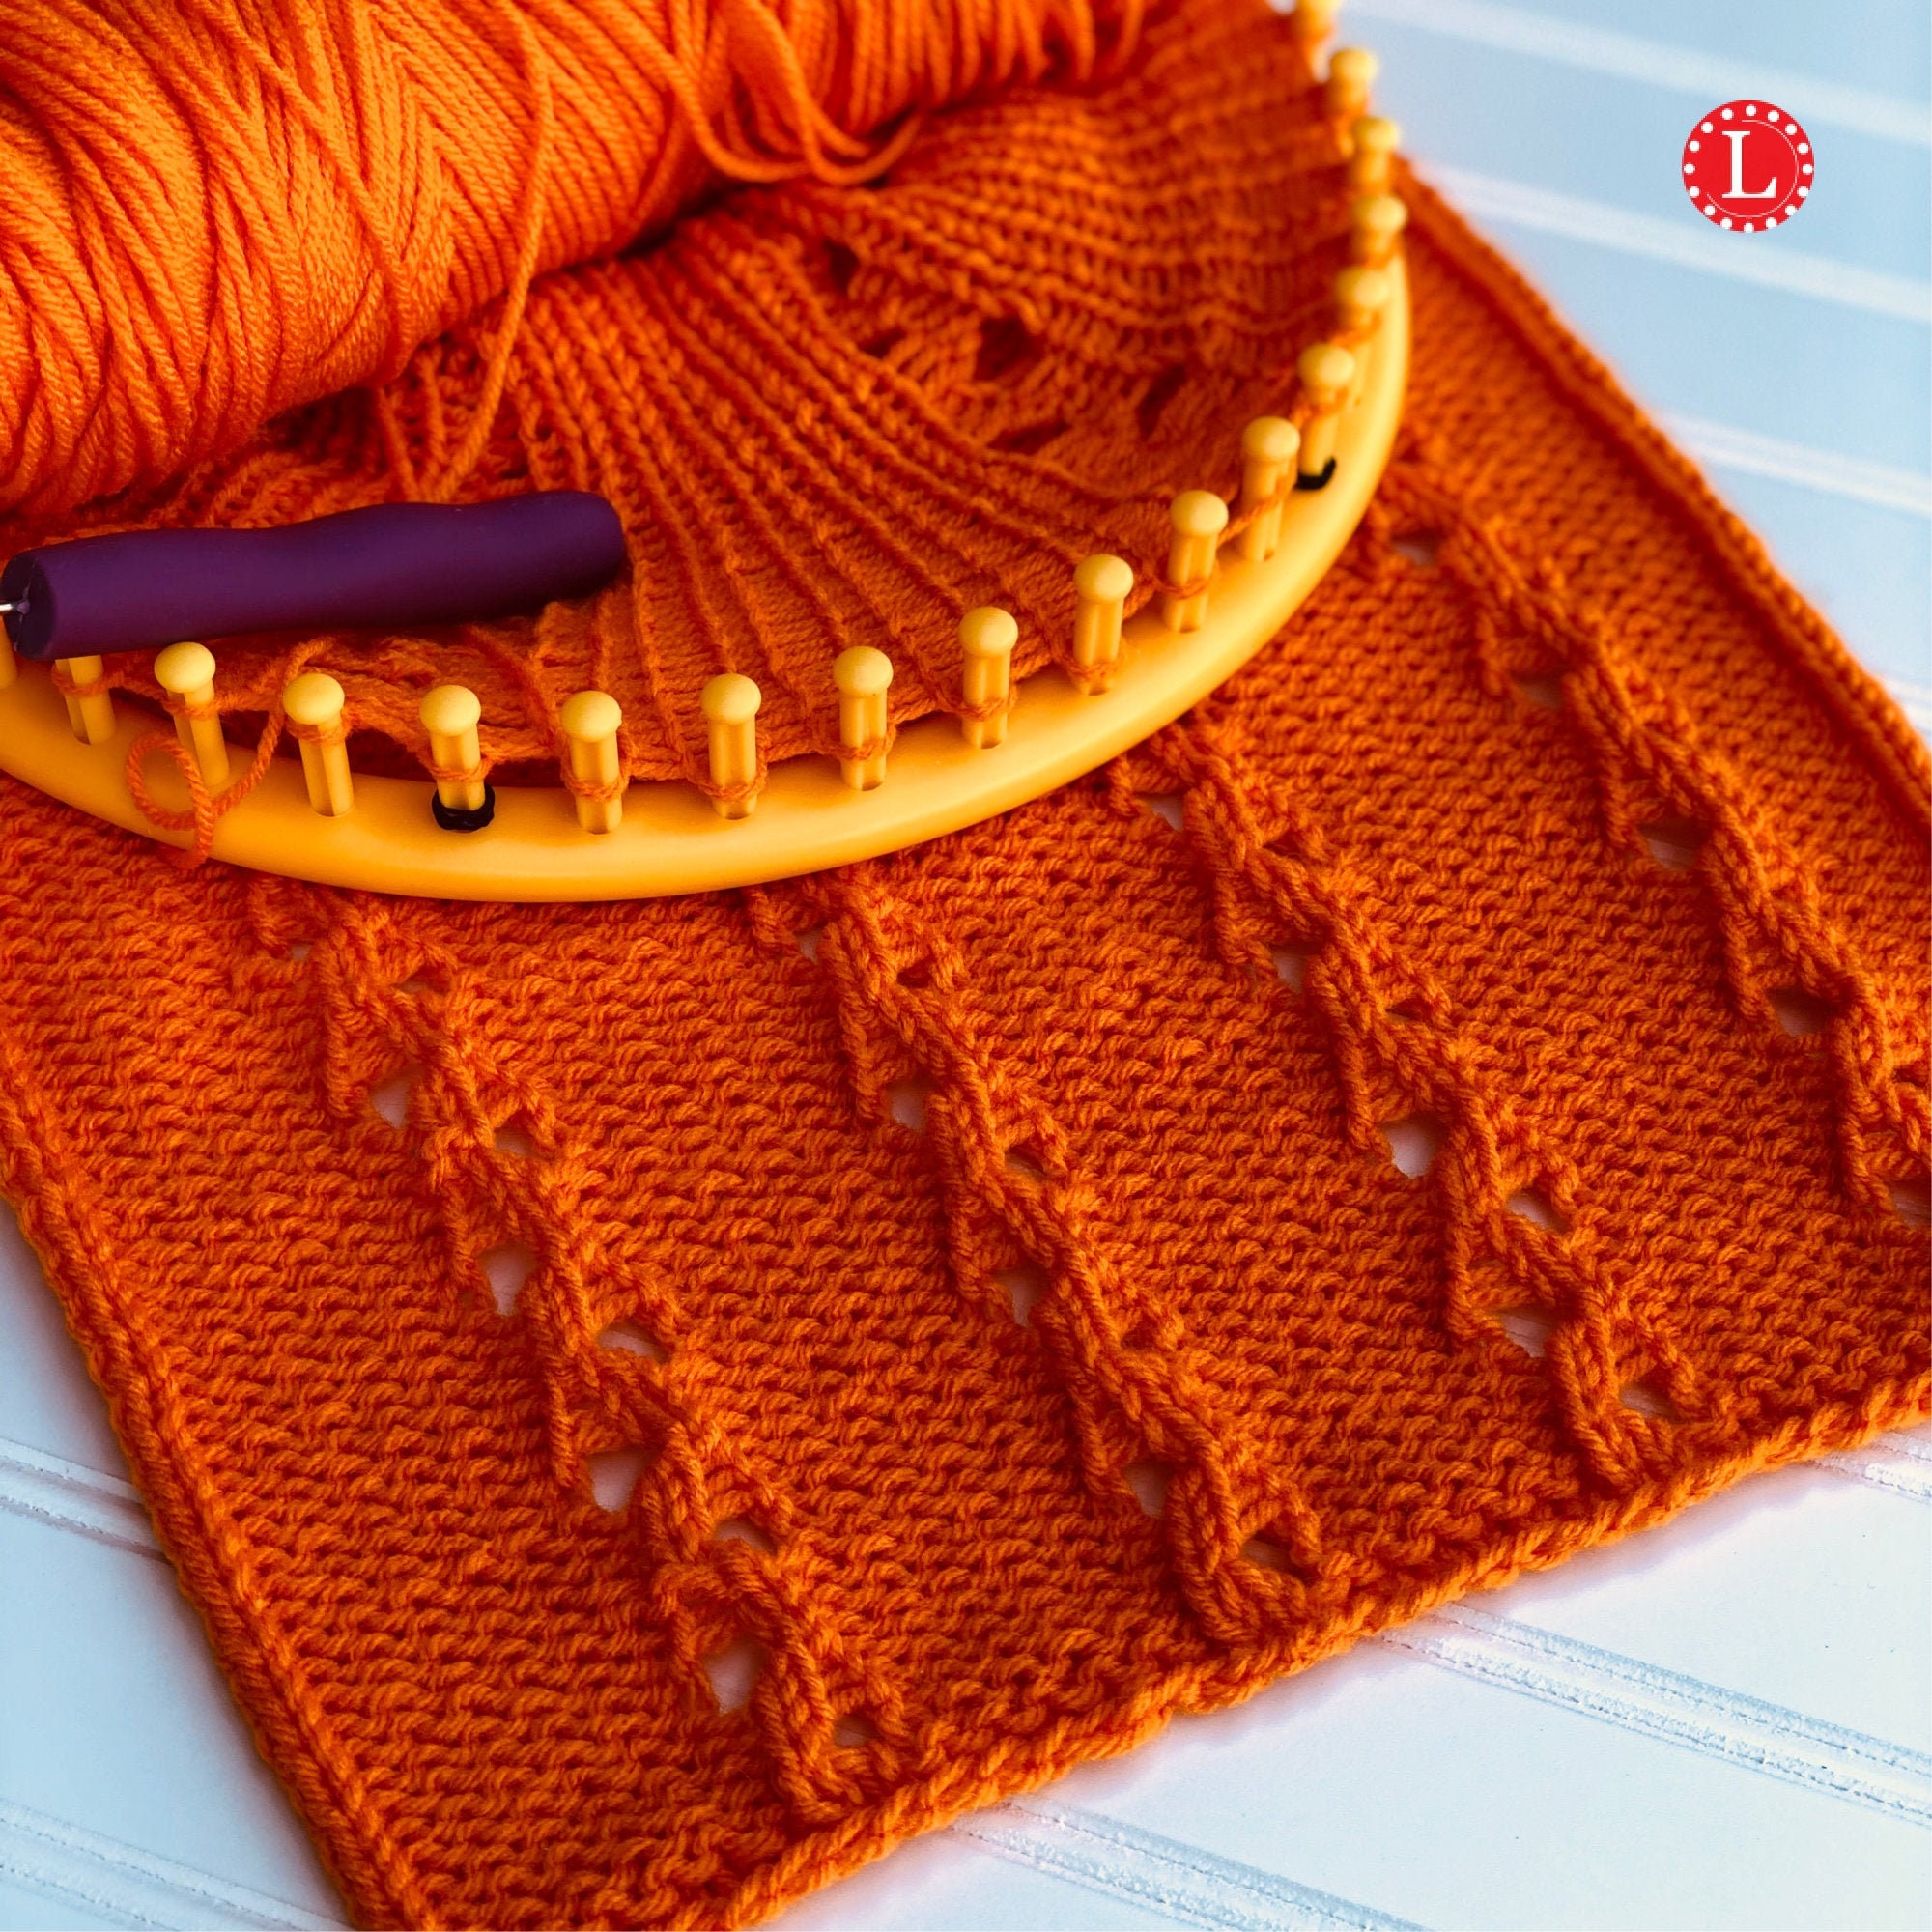 Loom Knitting: How to Decrease (K2tog) for Single Knitting 